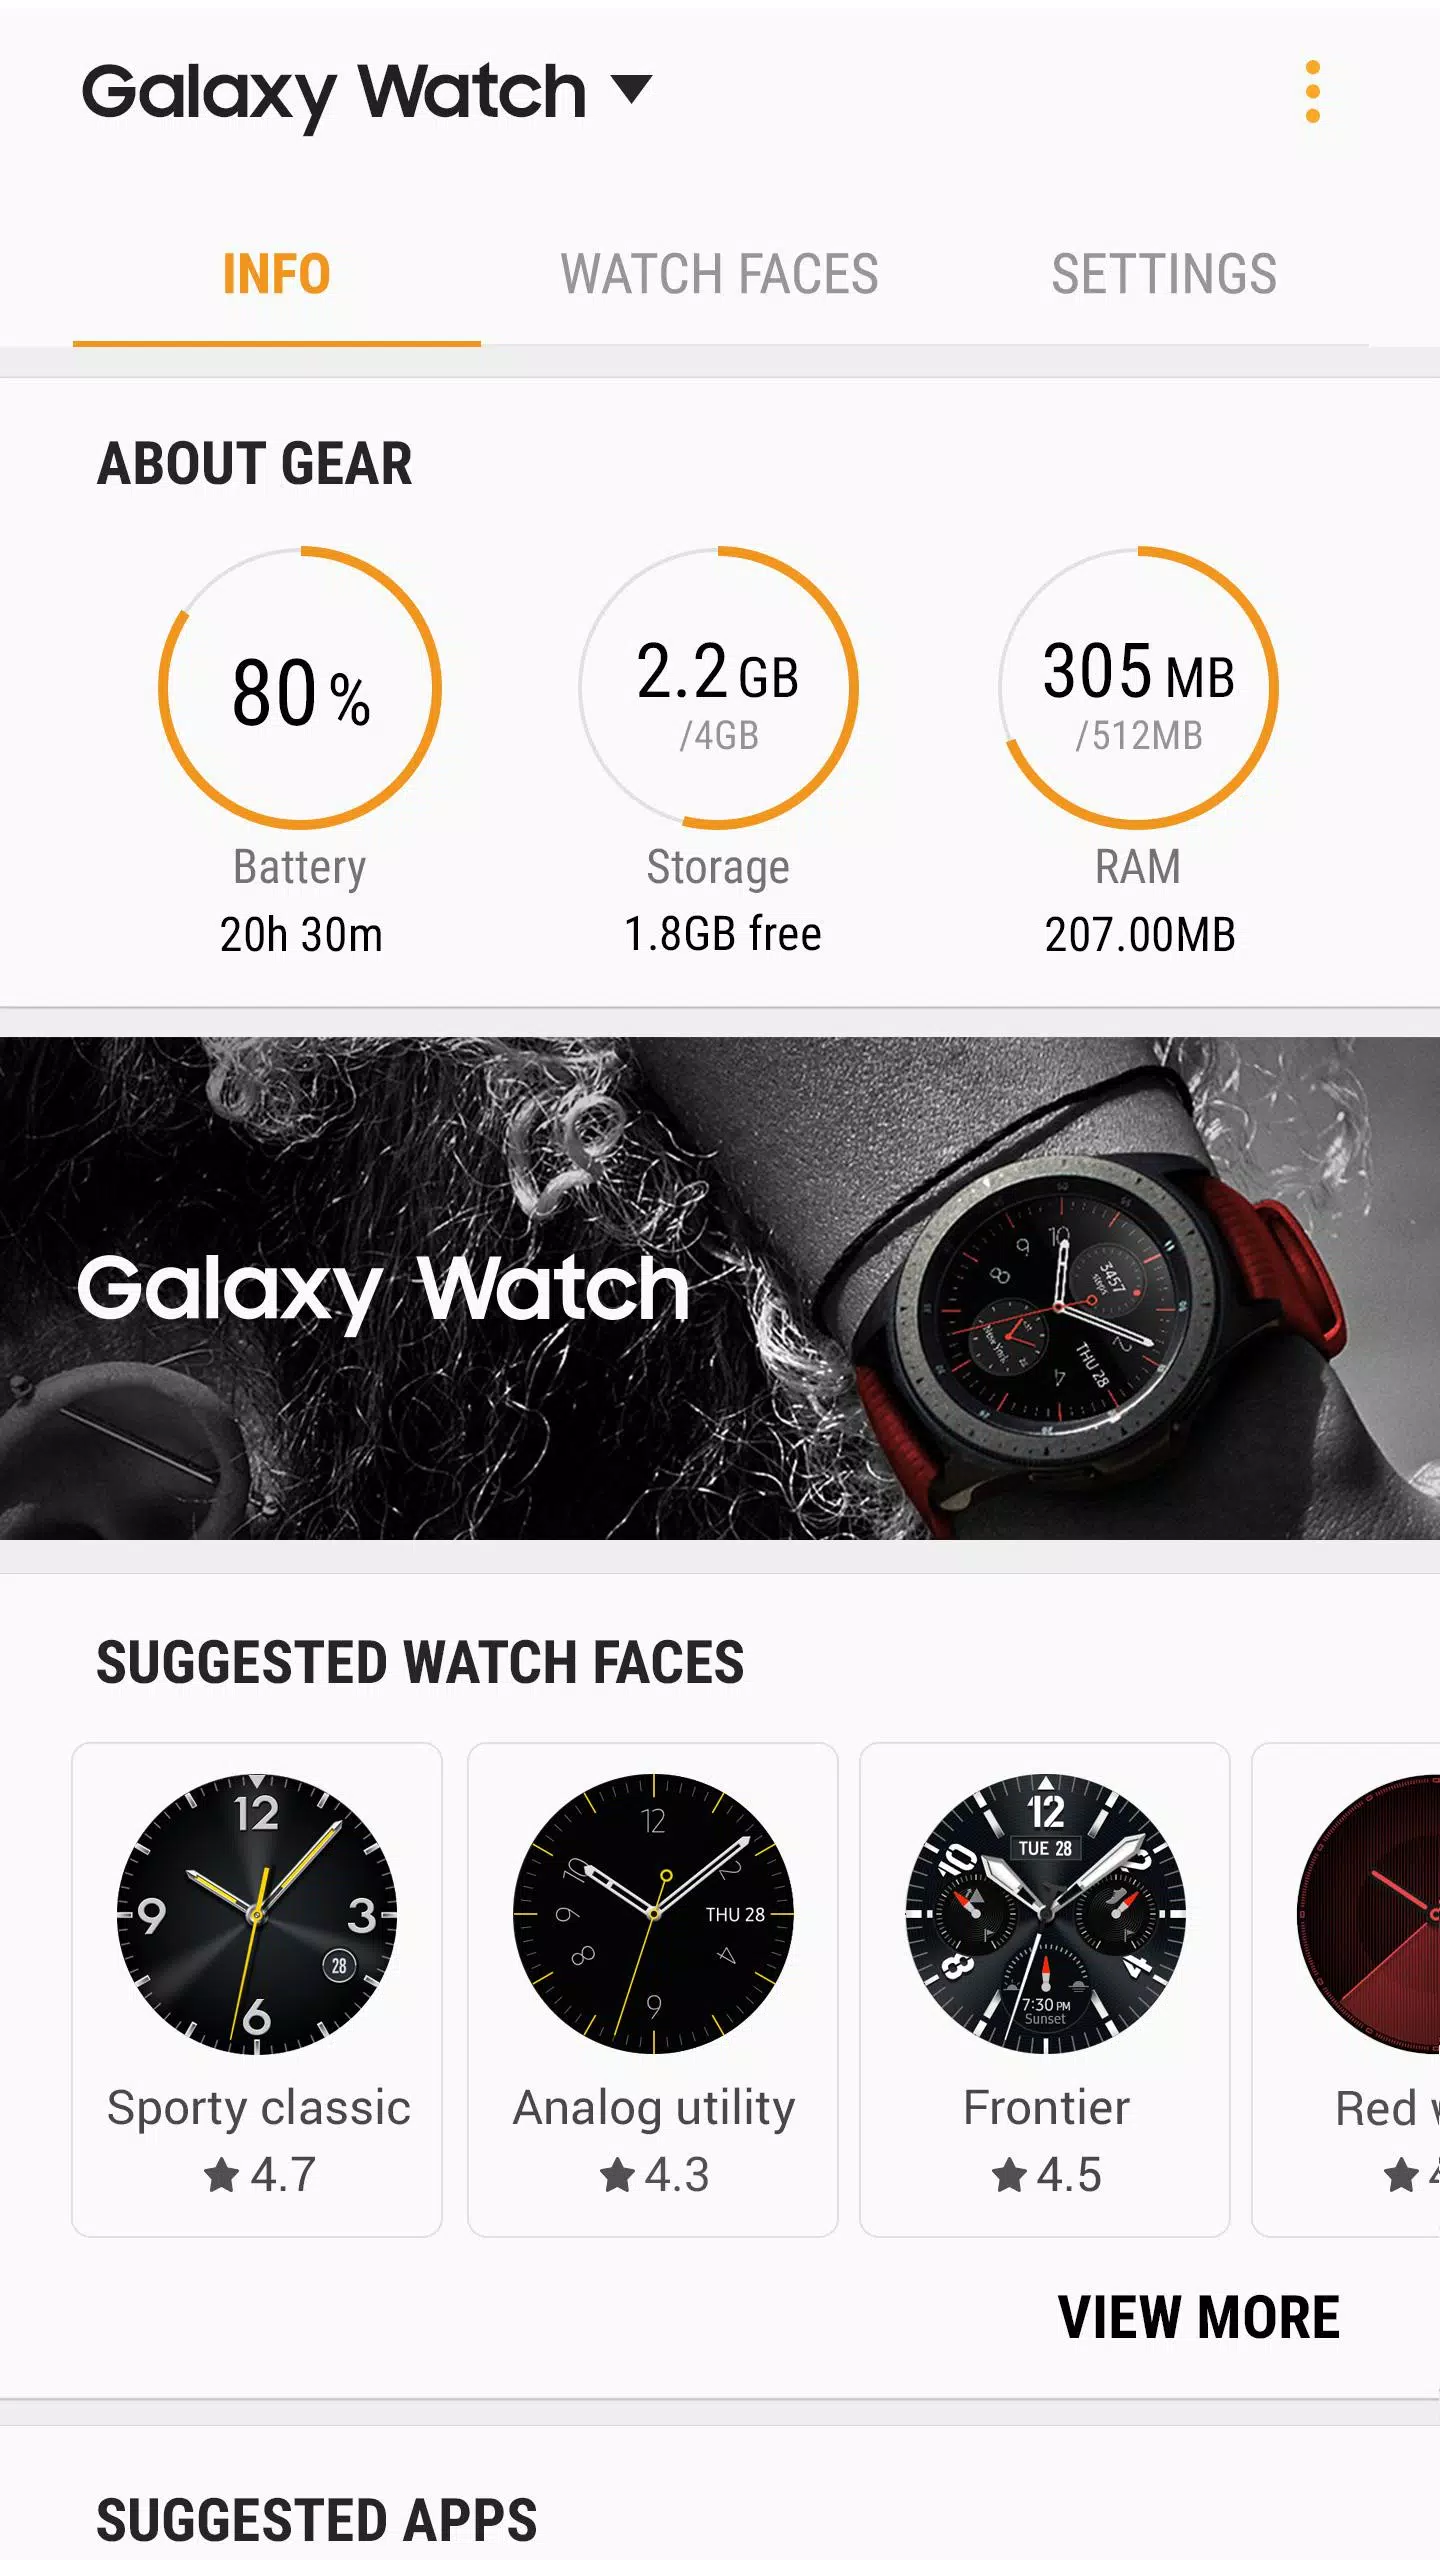 Программа для galaxy watch. Galaxy watch приложение. Приложение для Galaxy watch 4. Samsung Gear s приложение для андроида. Программа для часов самсунг Galaxy watch на андроид.